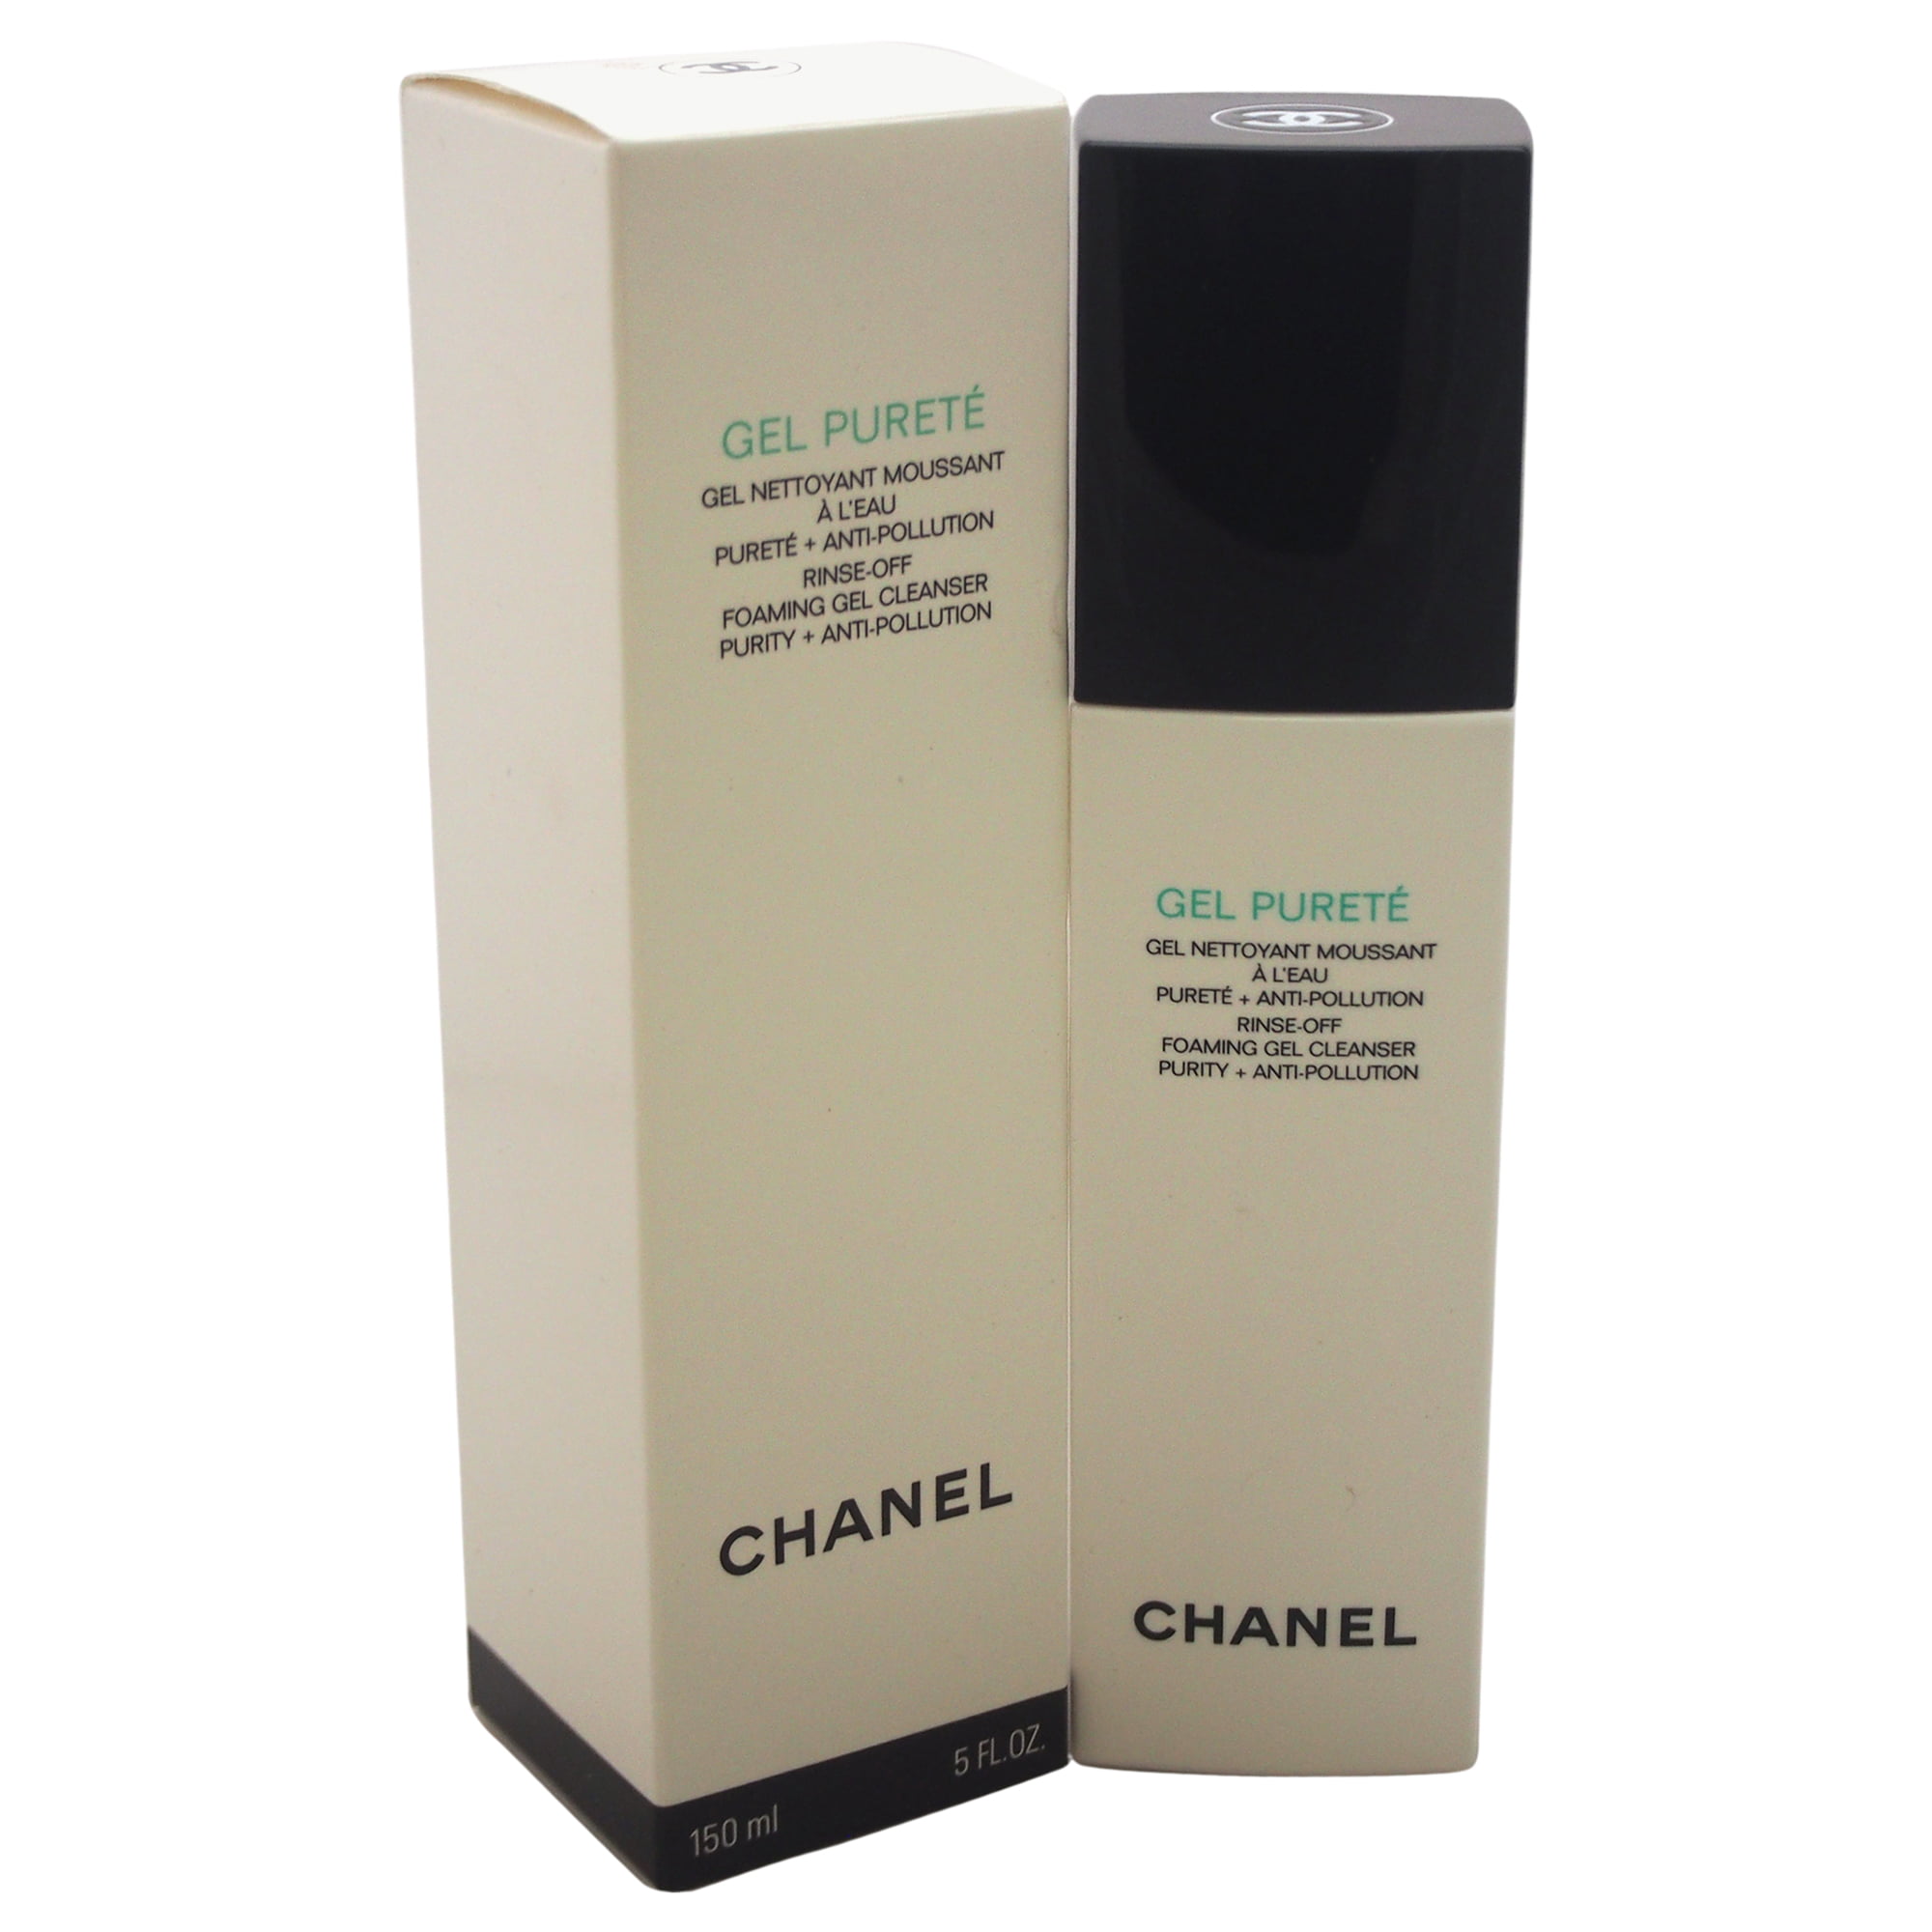 Gel Purete RinseOff Foaming Gel Cleanser Purity  AntiPollution by Chanel  for Unisex  5 oz Gel  Walmartcom